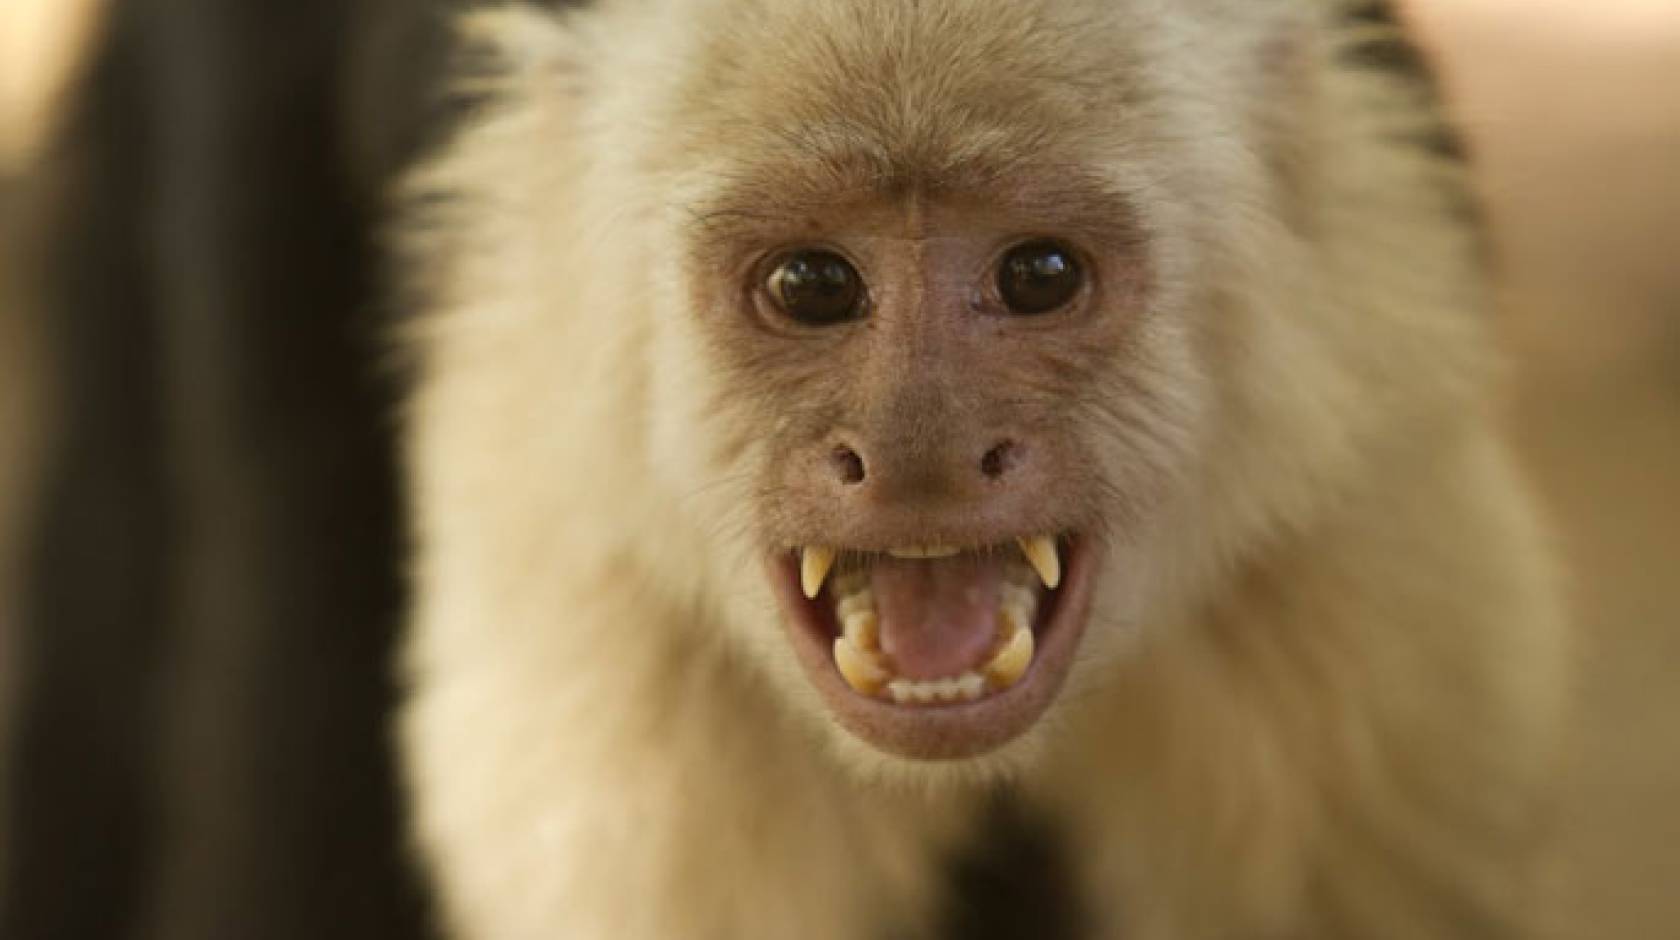 Capuchin monkey UCLA